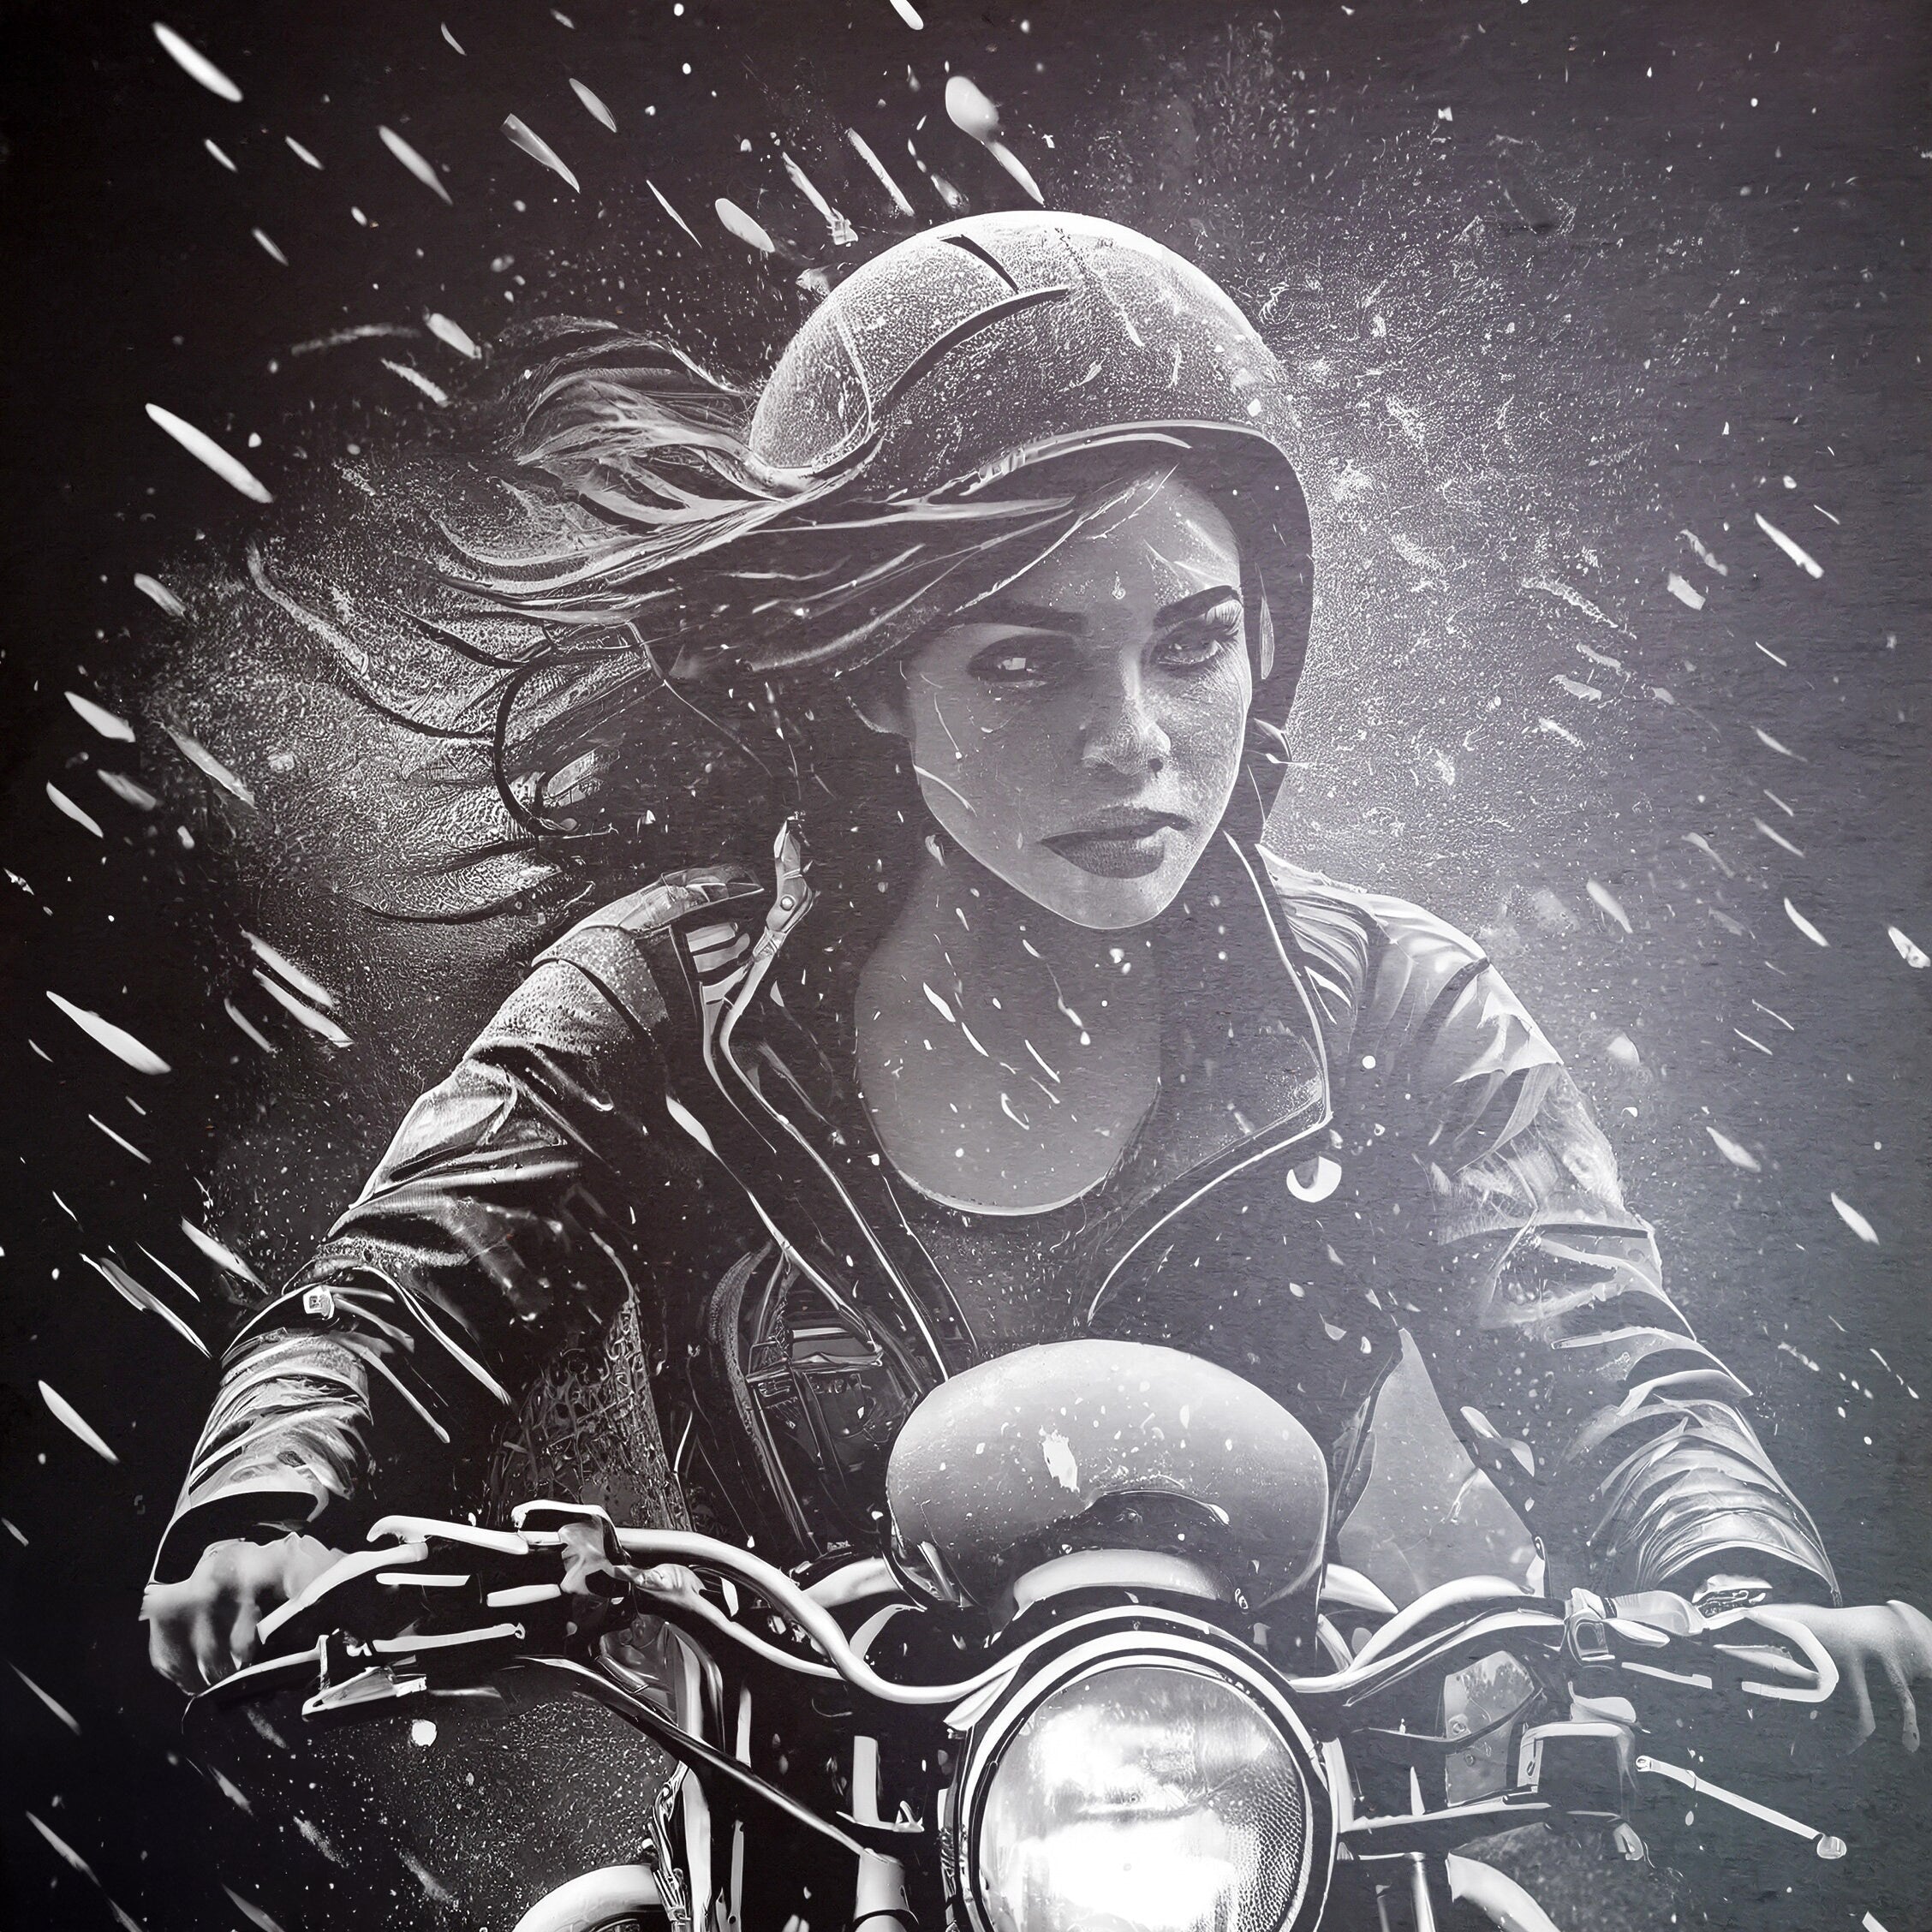 Slate - Wild Road: Girl on a motorcycle